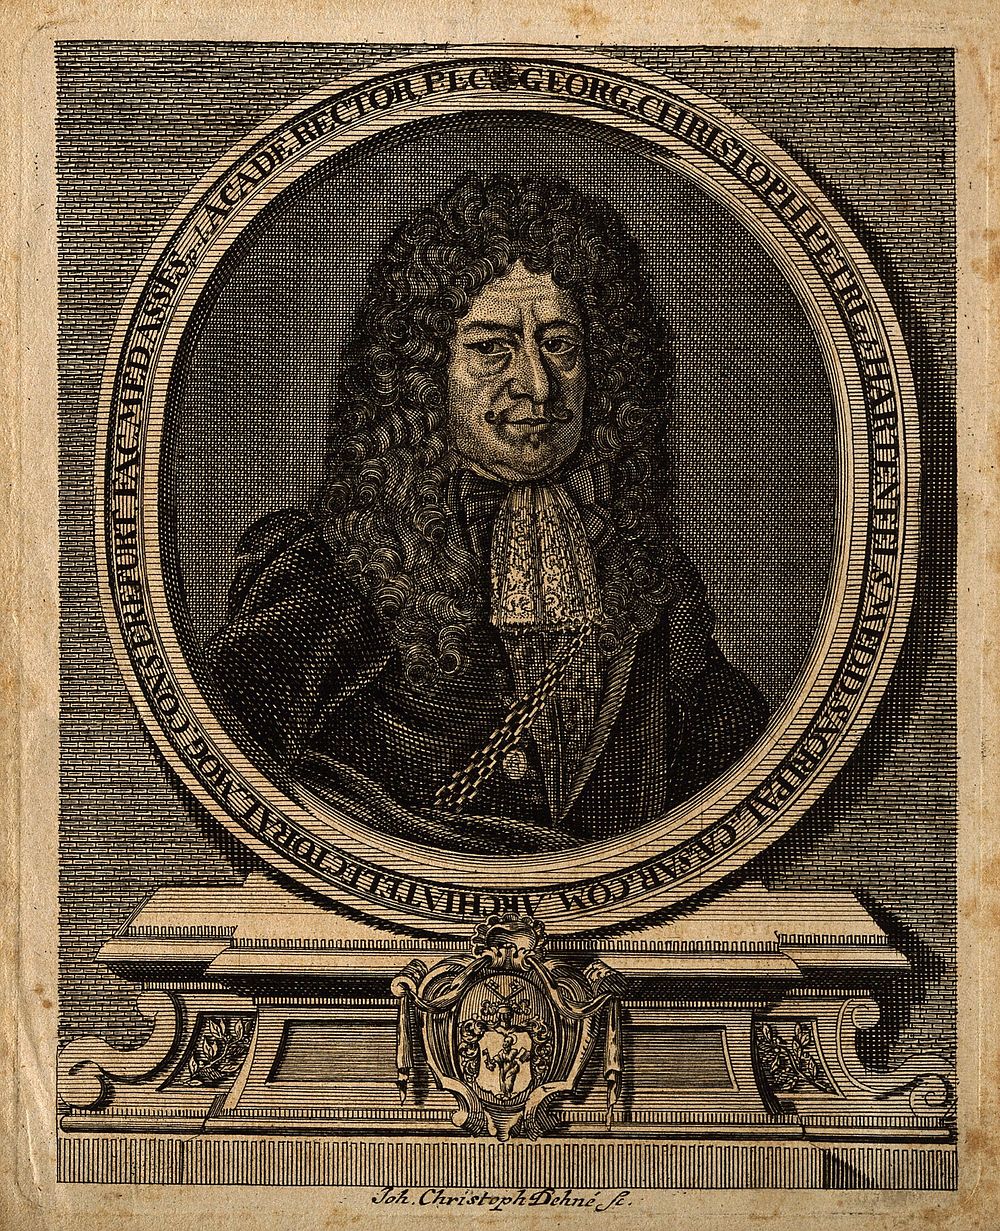 Georg Christoph Petri von Hartenfels. Line engraving by J. C. Dehne after J. Beyschlag.